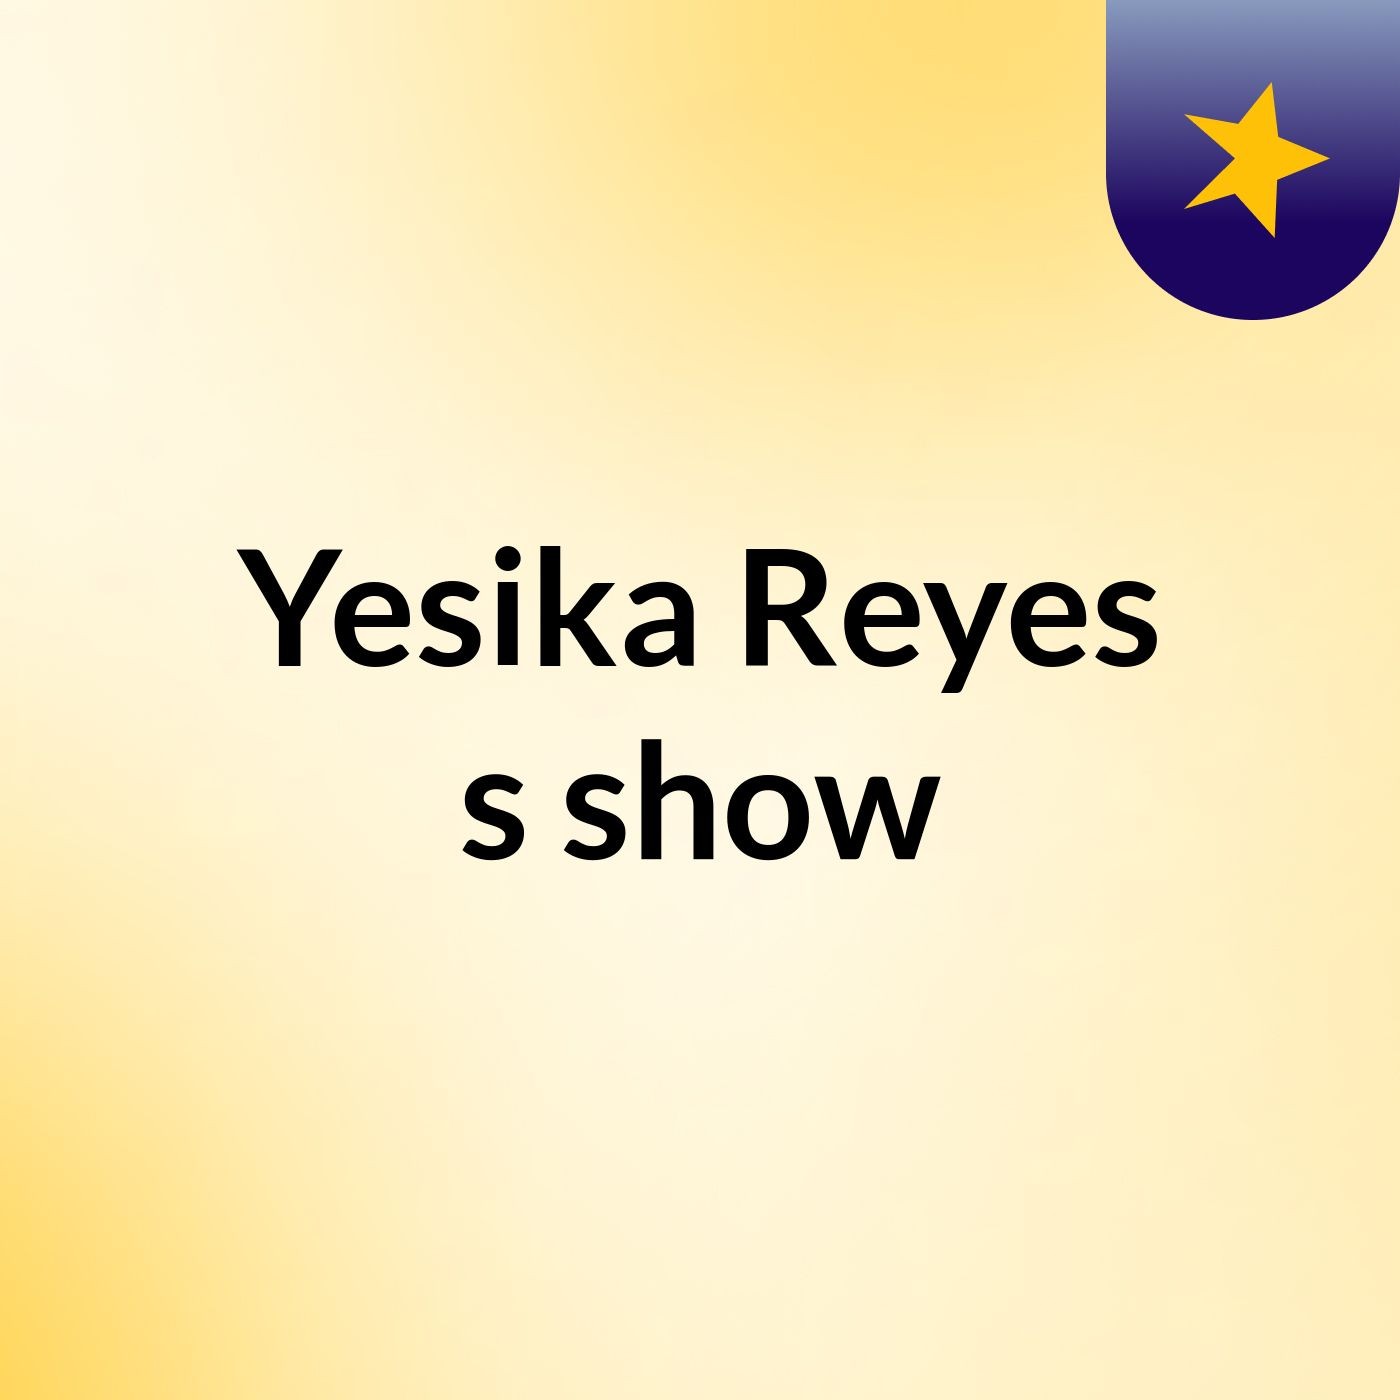 Yesika Reyes's show